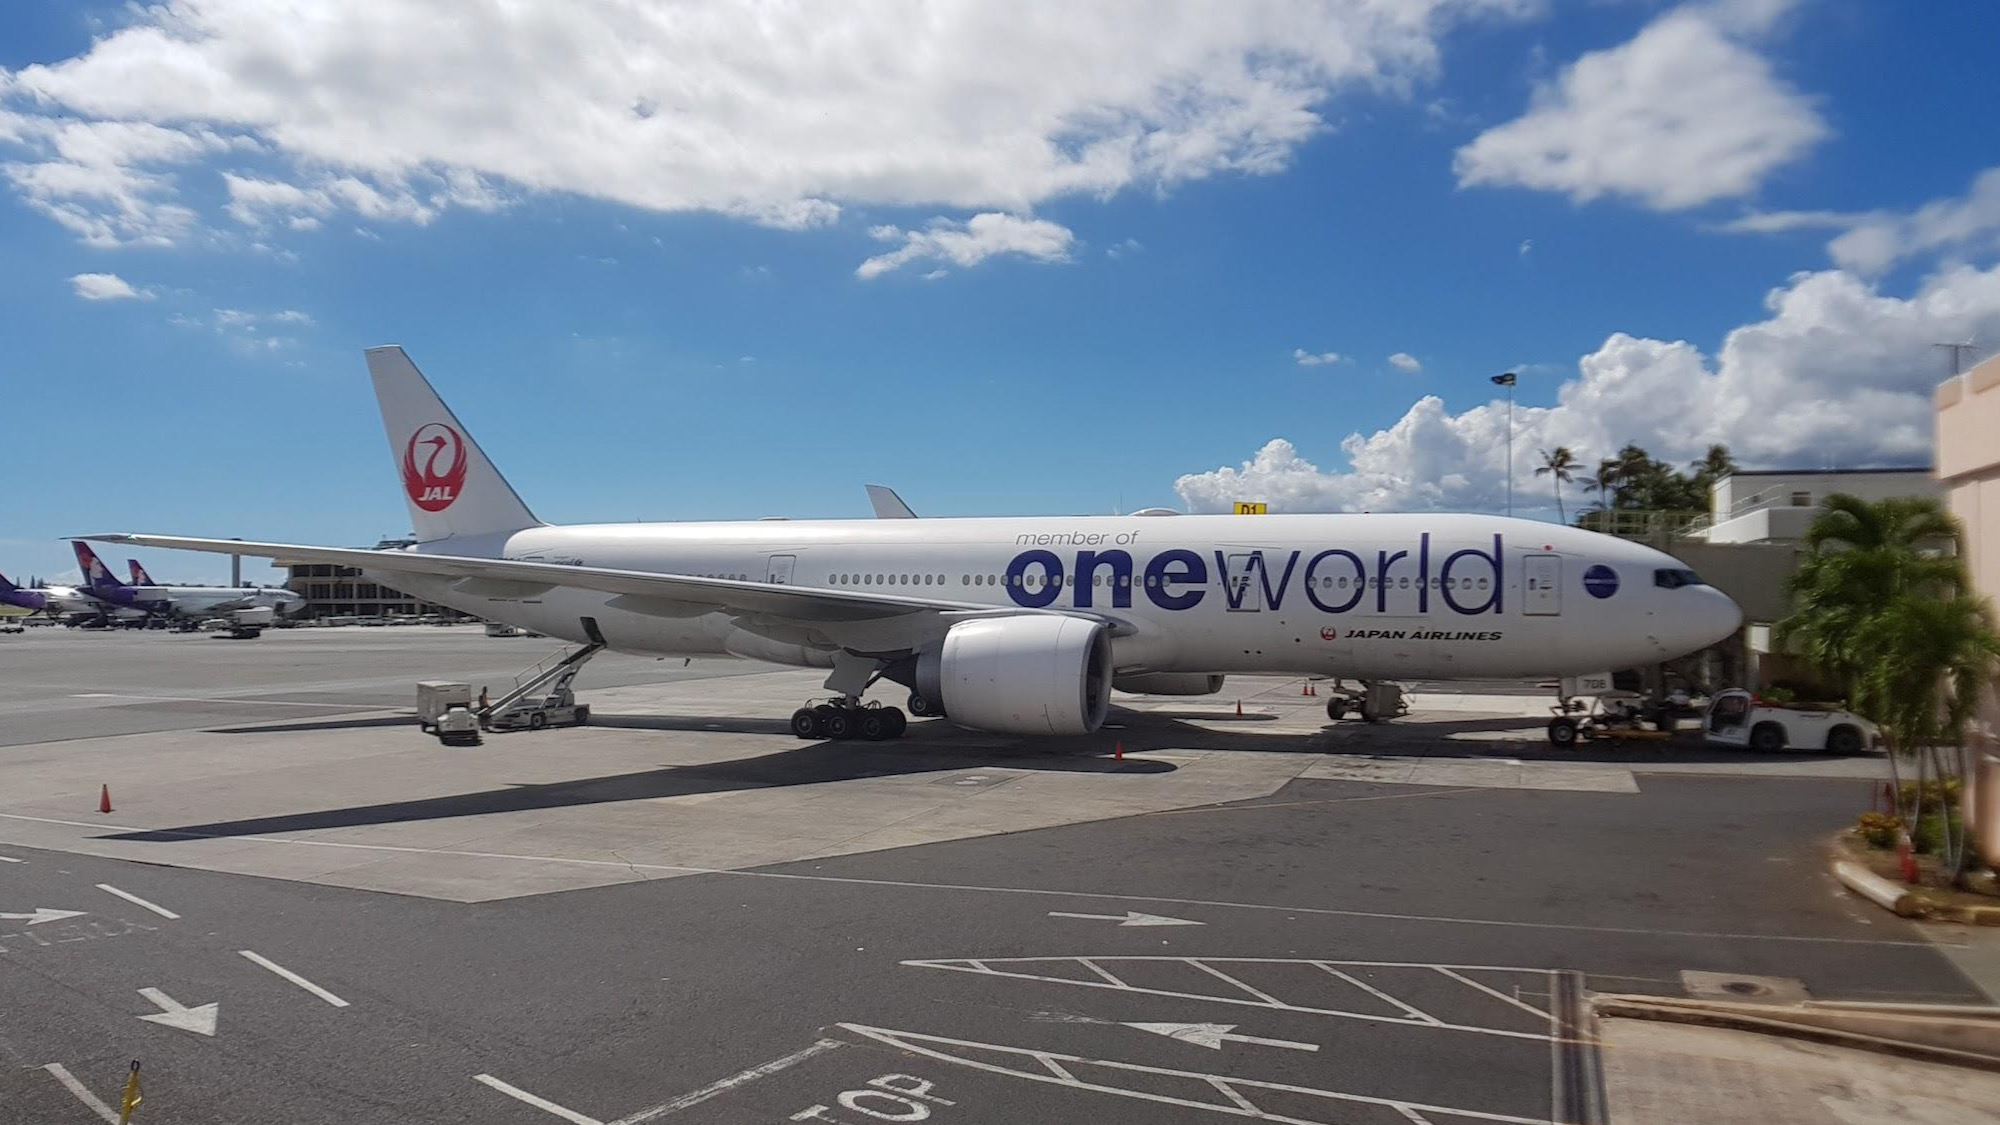 JAL oneworld airplane on tarmac